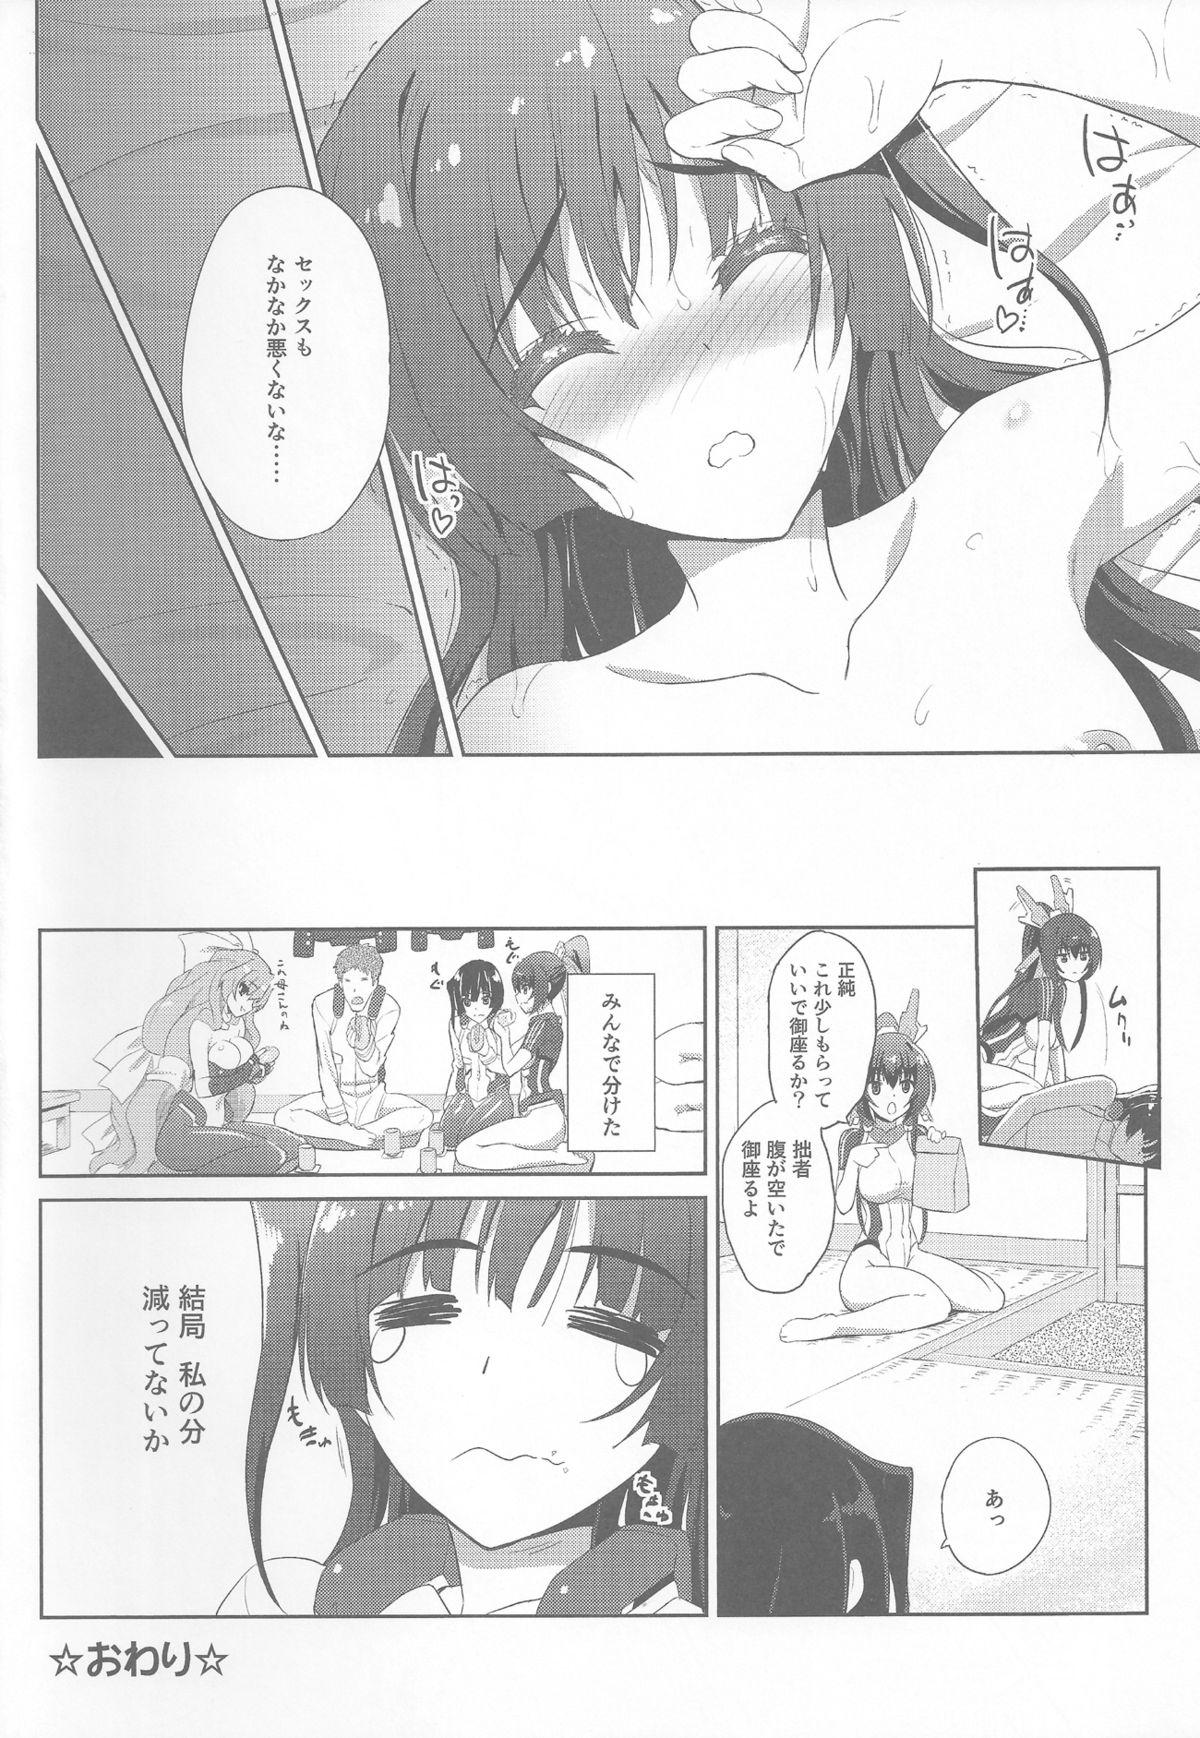 One Sex de Gozaru!! 2 - Kyoukai senjou no horizon Cavalgando - Page 31